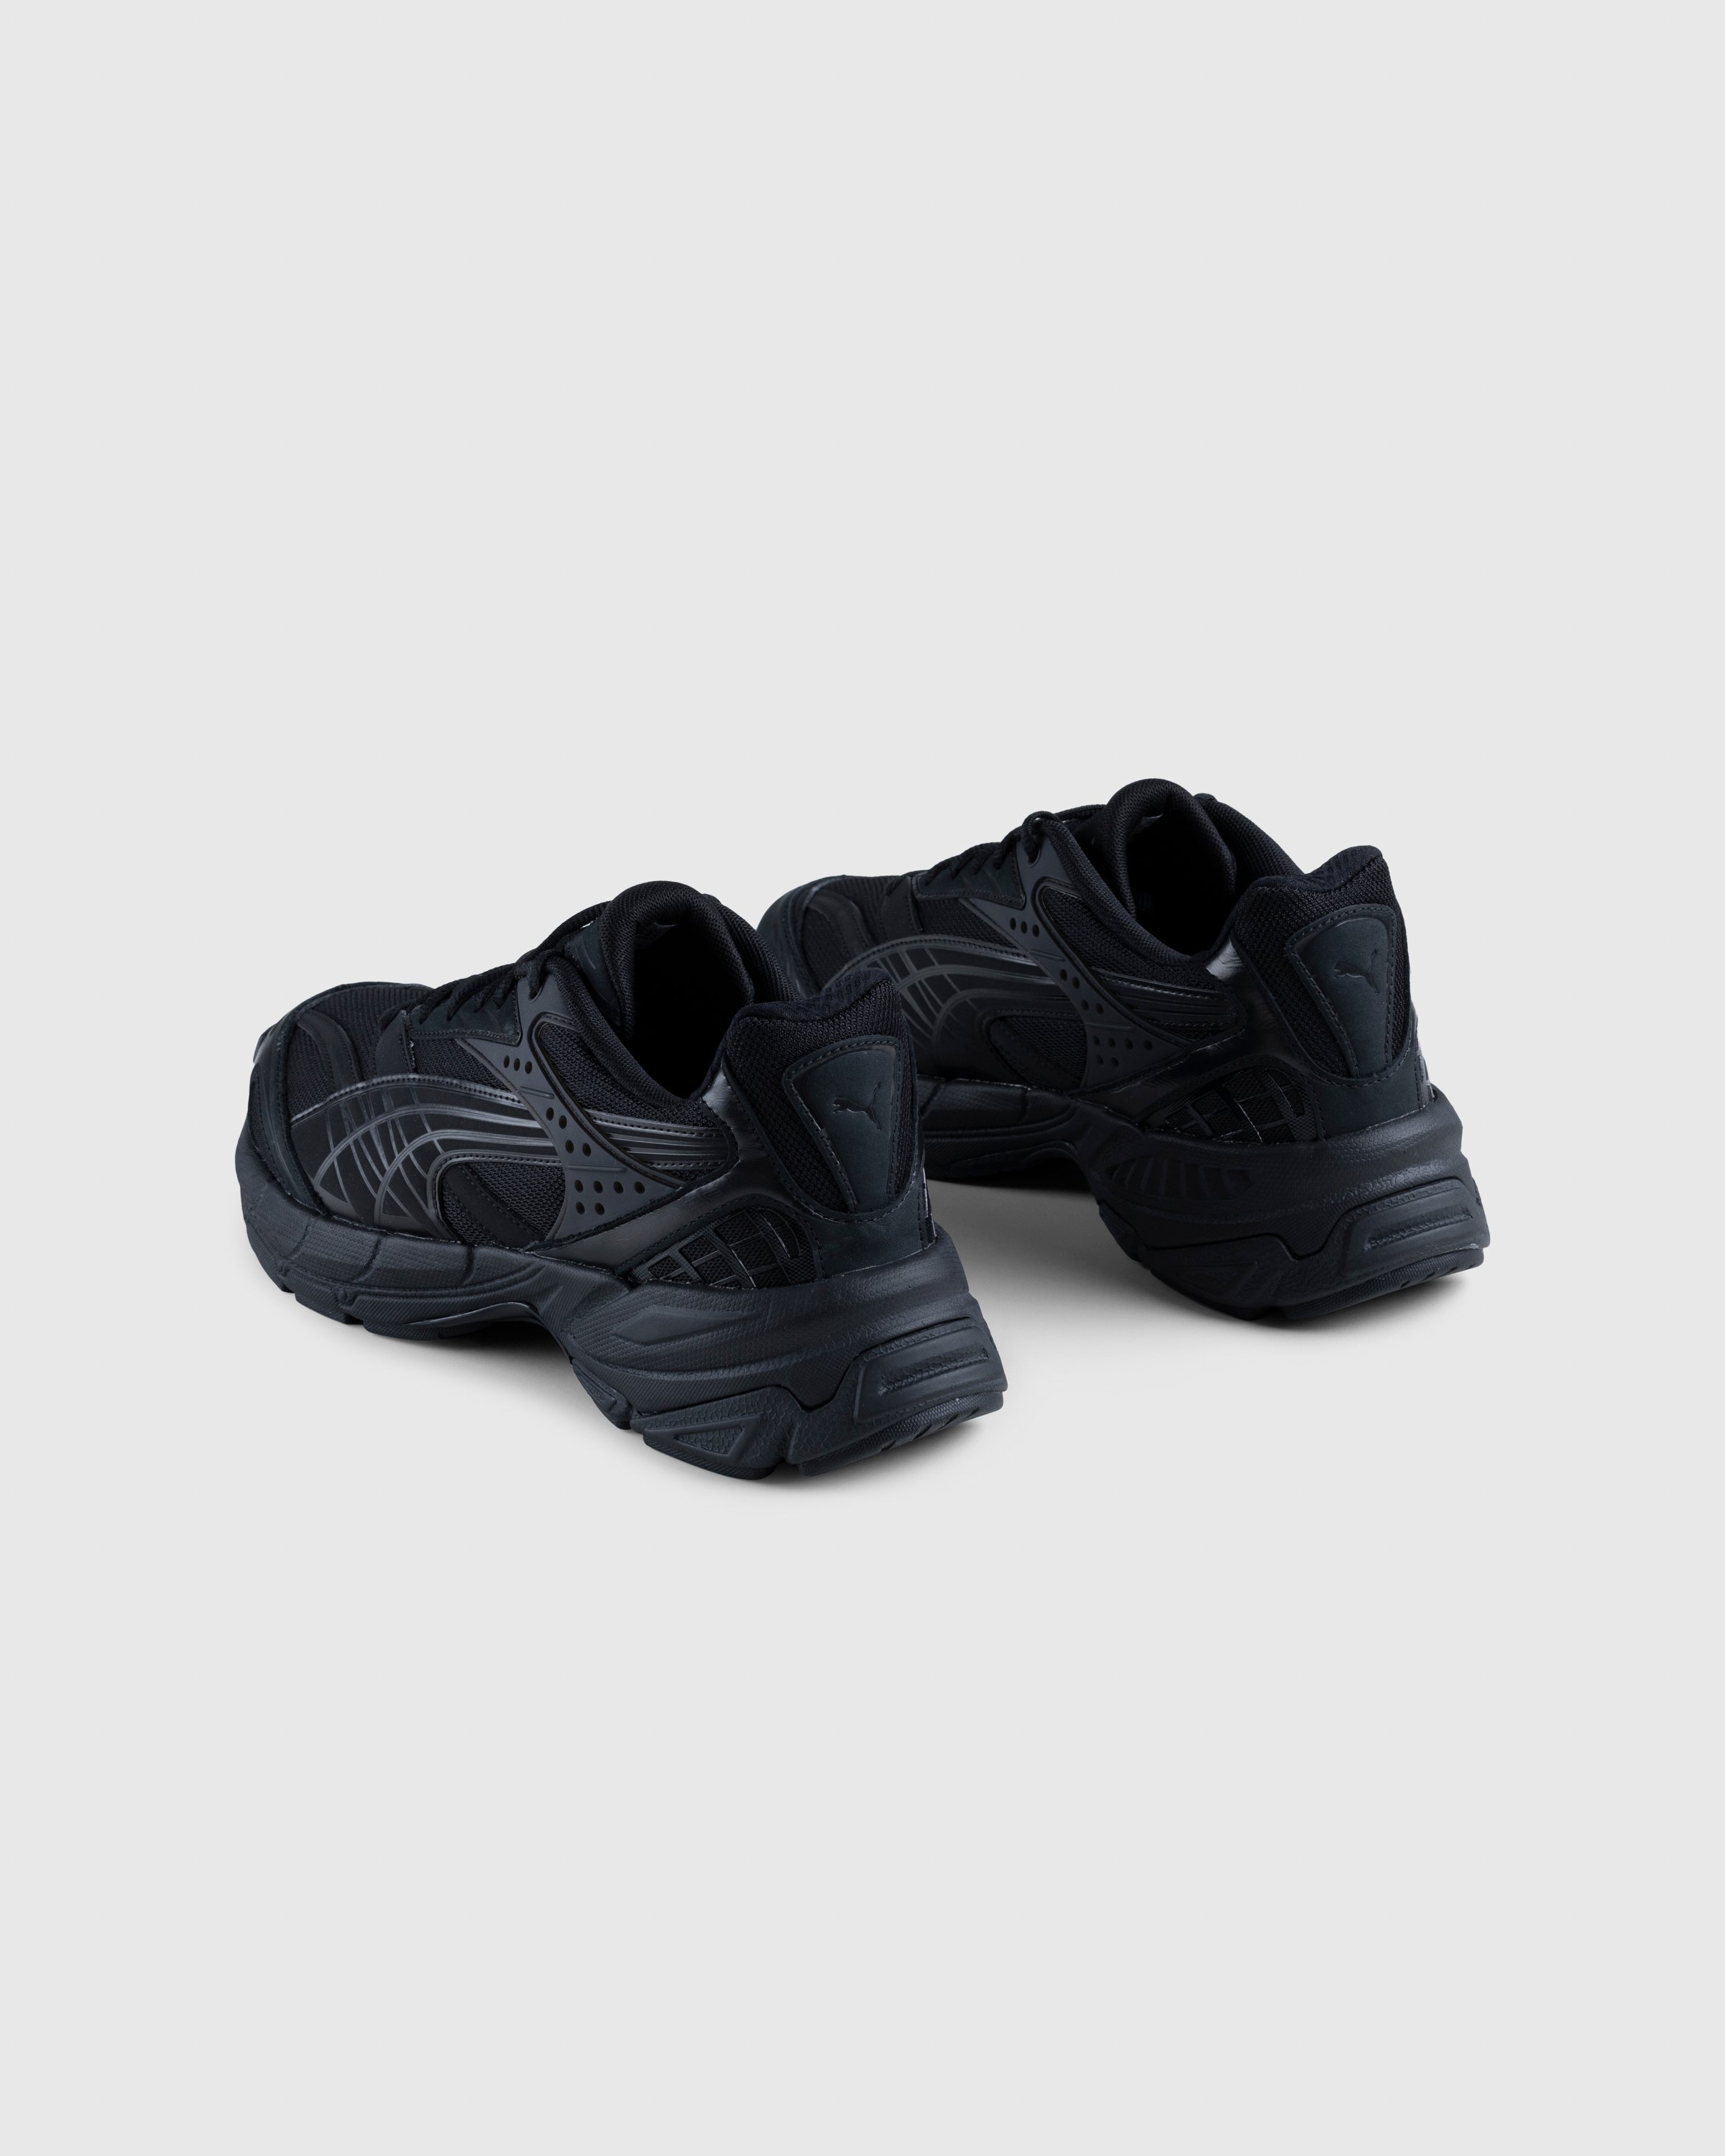 Puma - Velophasis PRM Black - Footwear - Black - Image 4